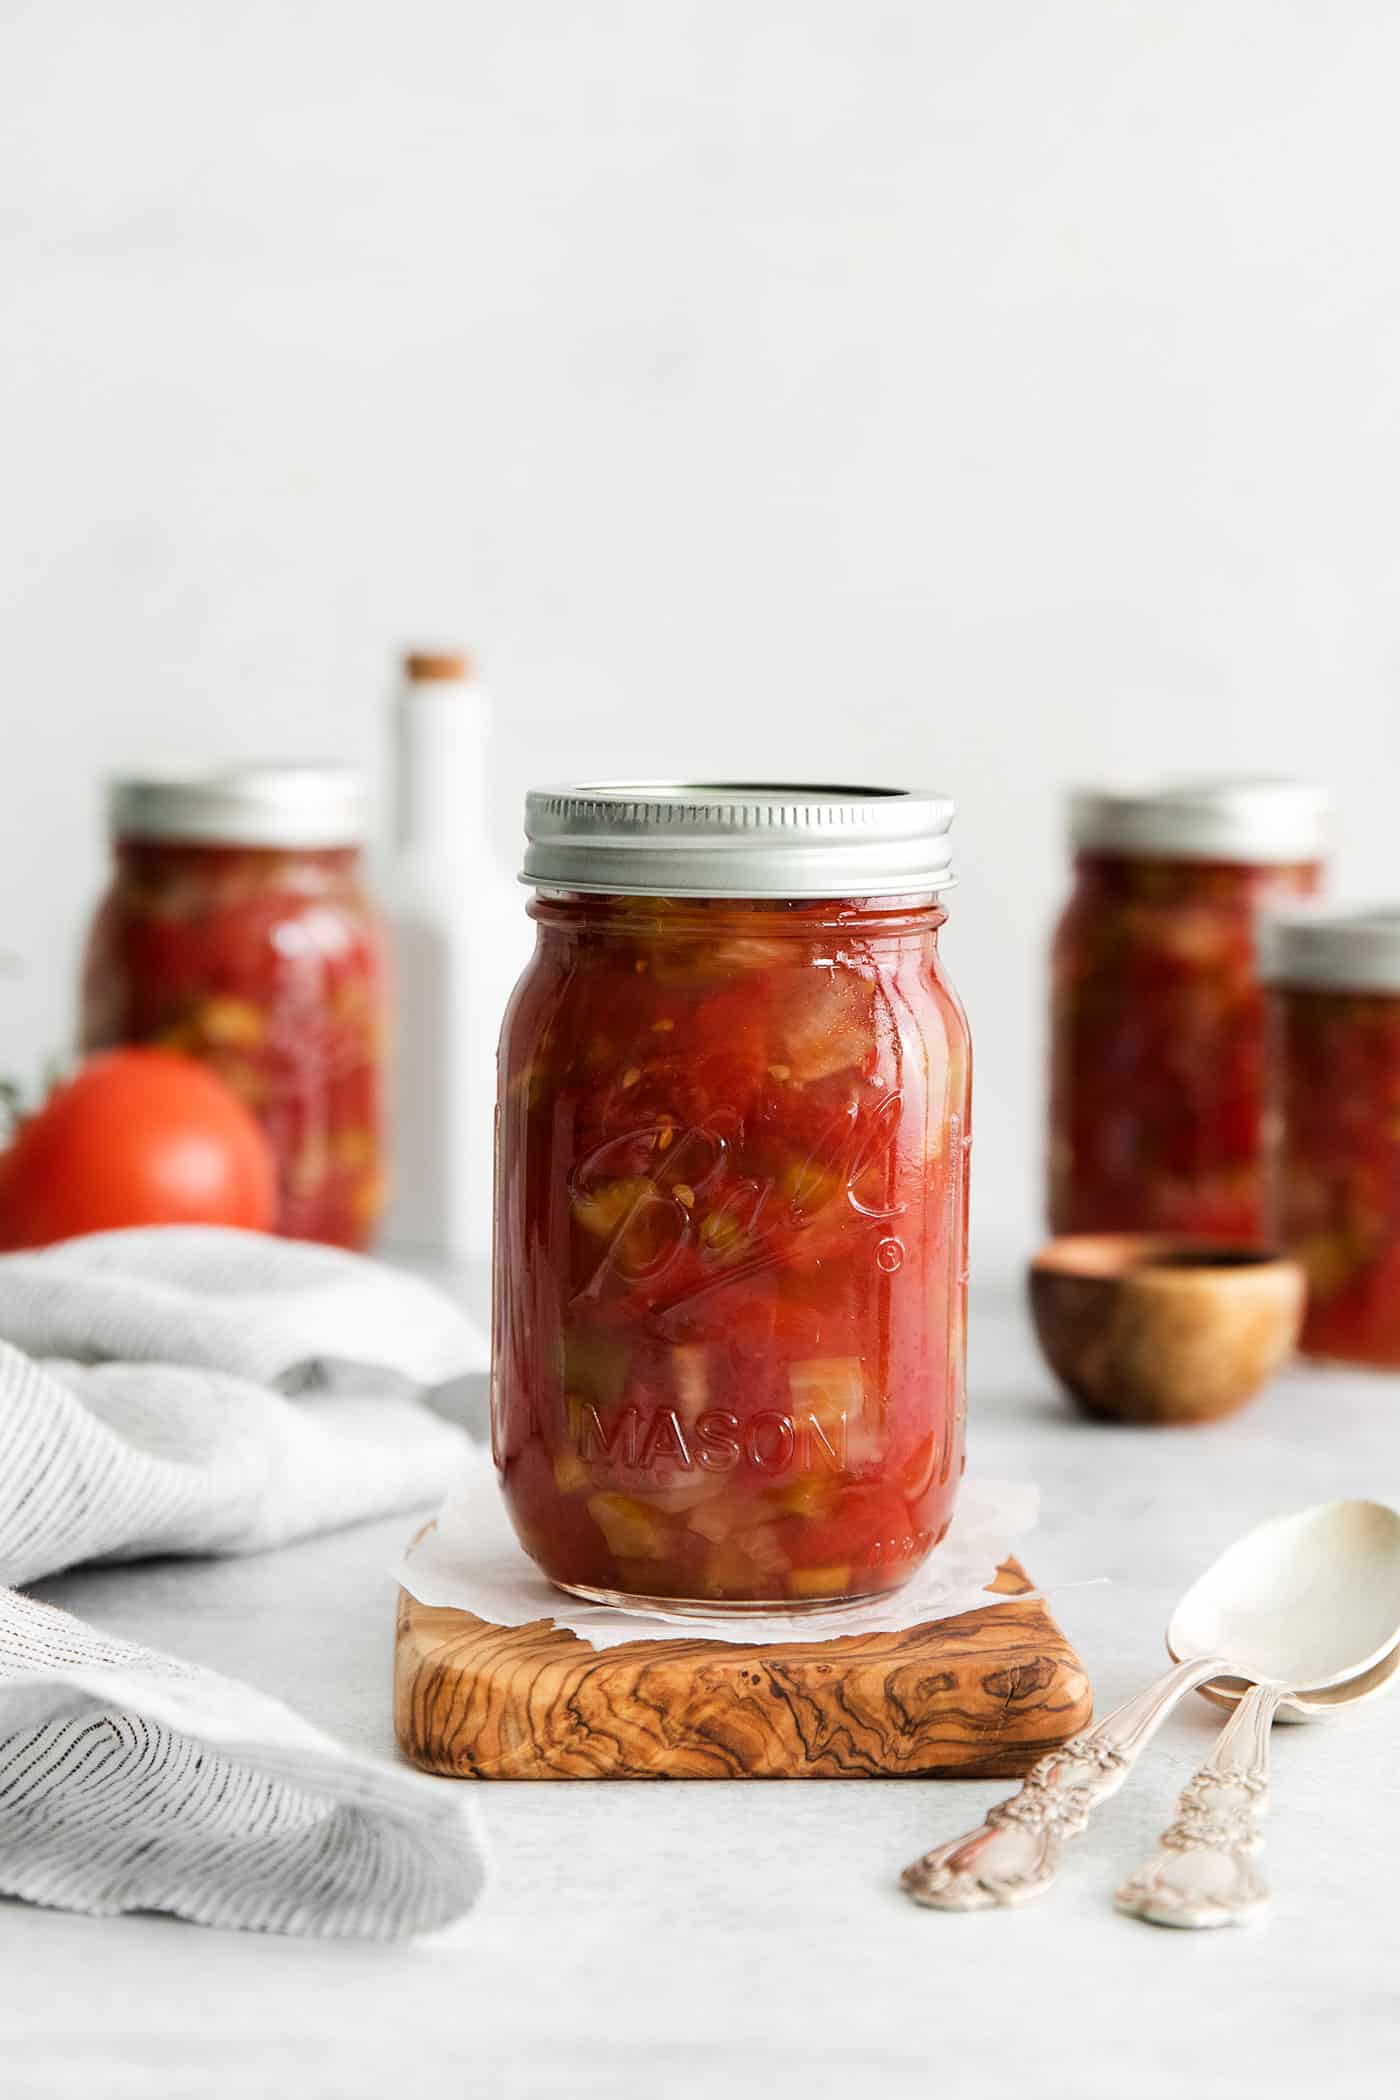 A jar of chili stewed tomatoes